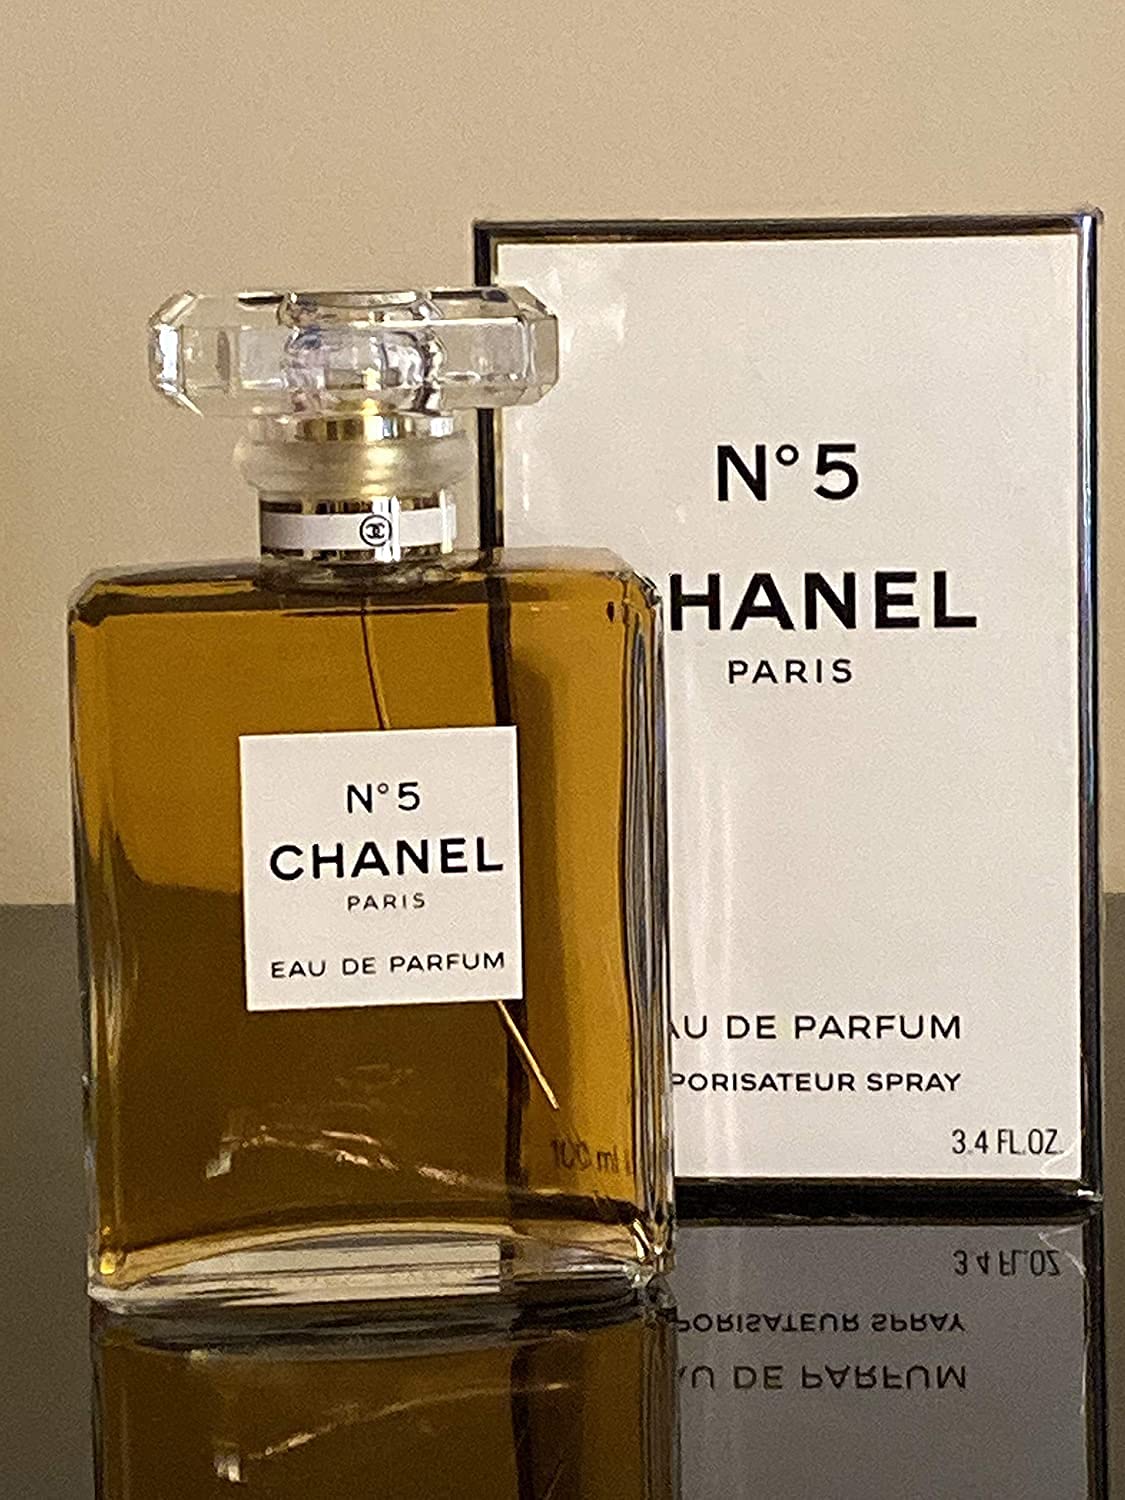 Chanel No. 5 perfume